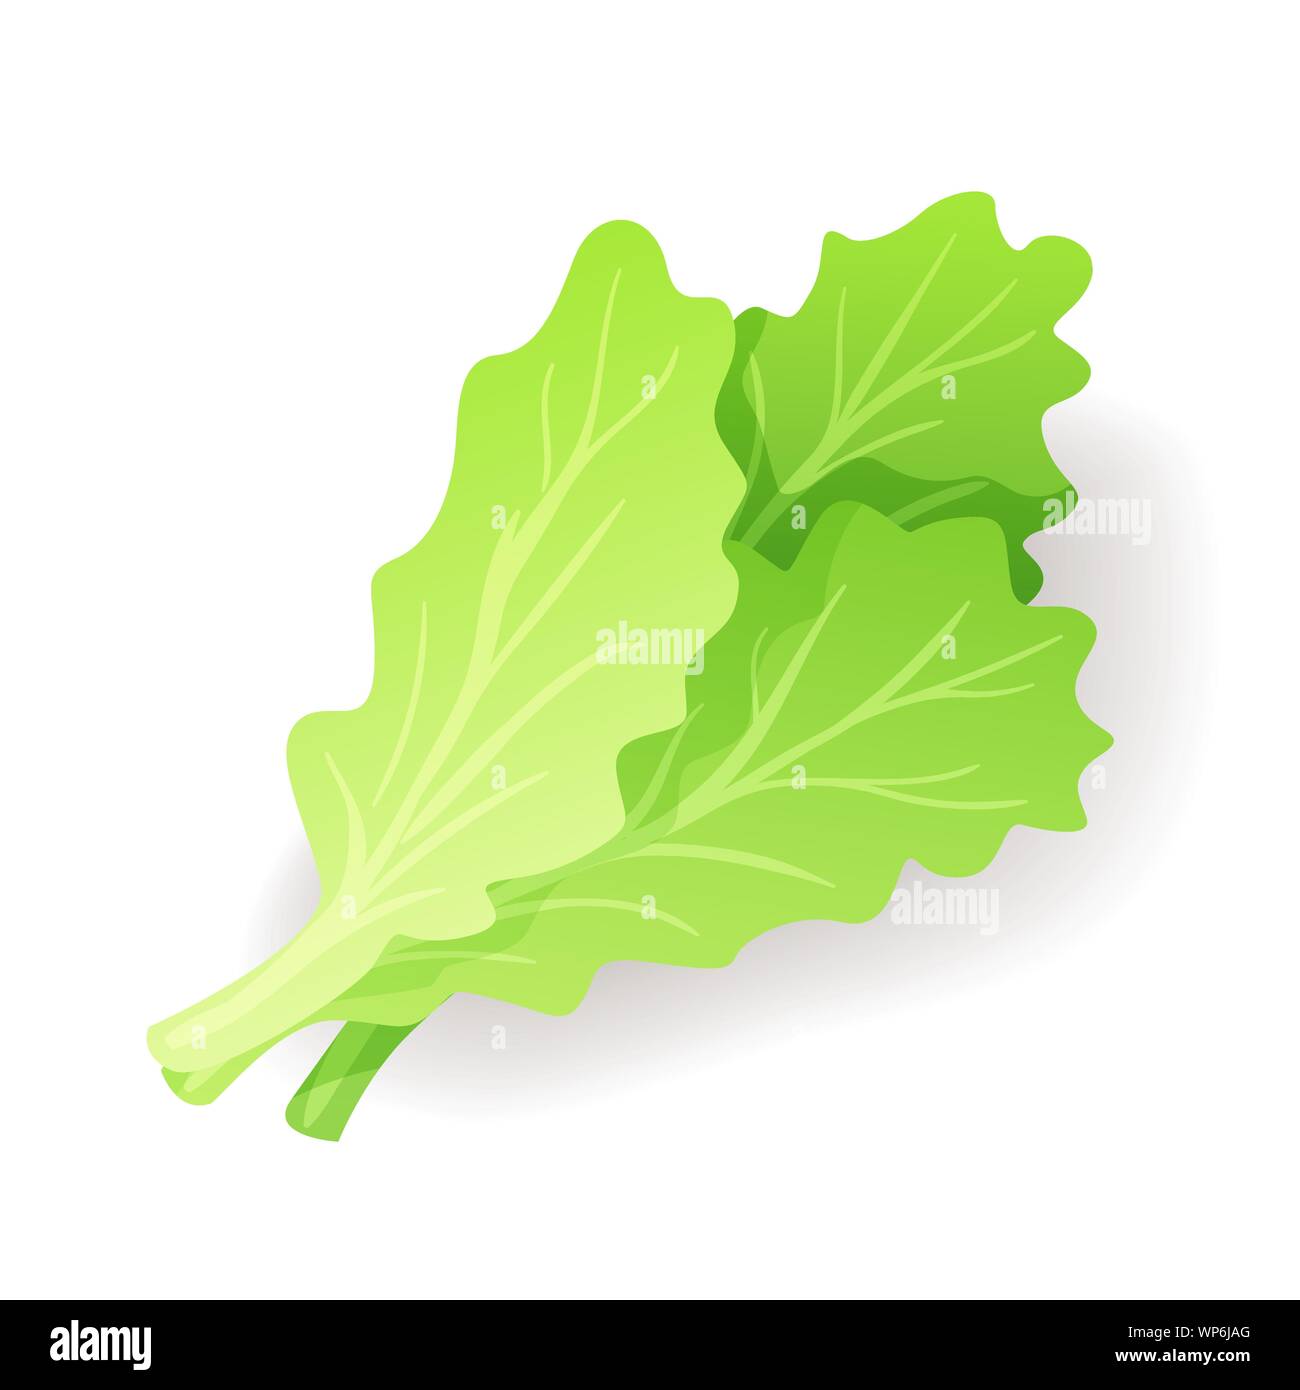 https://c8.alamy.com/comp/WP6JAG/fresh-green-salad-leaf-icon-isolated-organic-healthy-food-vegetable-vector-illustration-WP6JAG.jpg